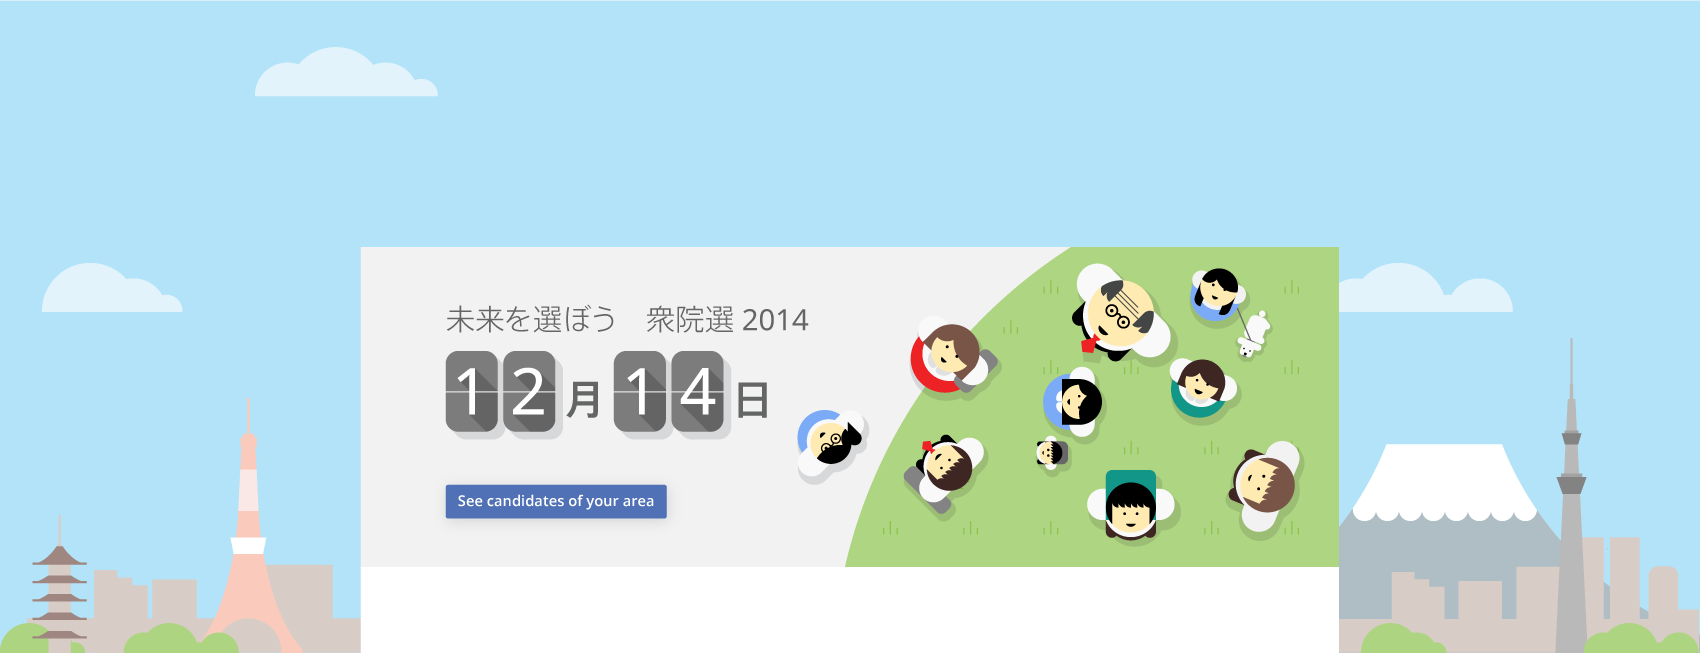 Google Japan 2015 Election Illustrations